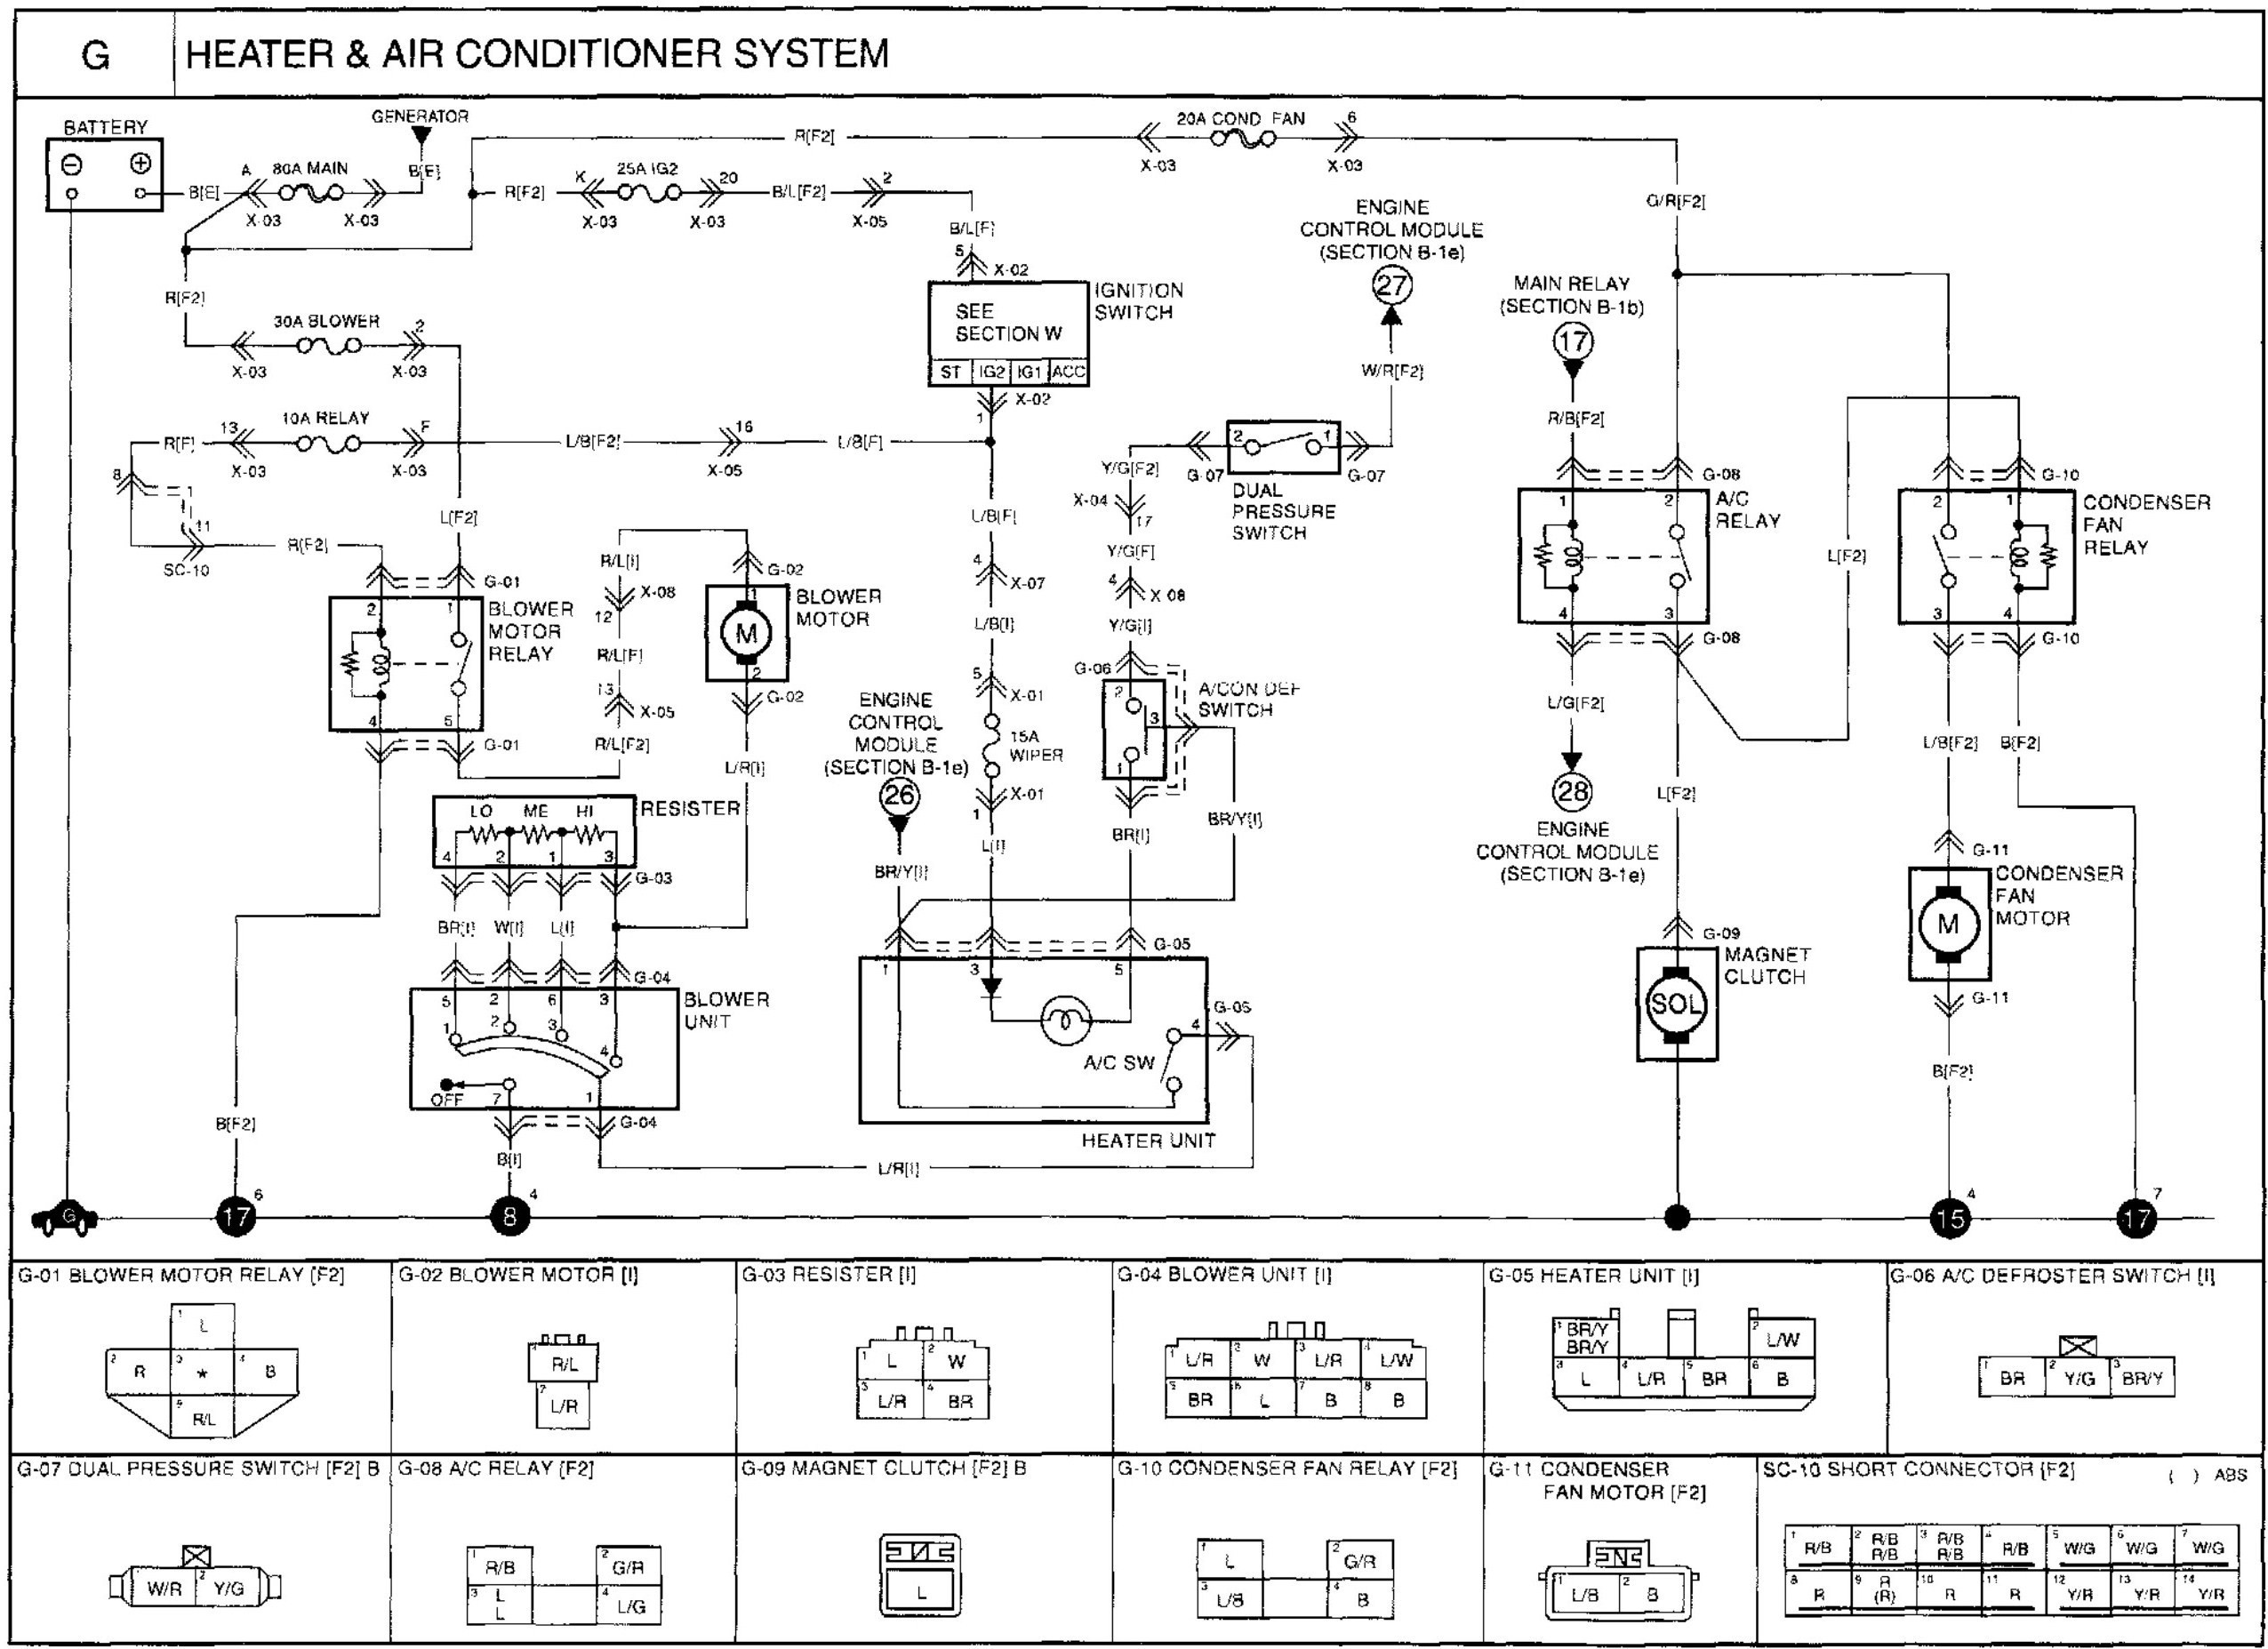 2003 Kia Rio Engine Diagram Fancy Kia Picanto Wiring Diagram Ensign Electrical Wiring Diagram Of 2003 Kia Rio Engine Diagram